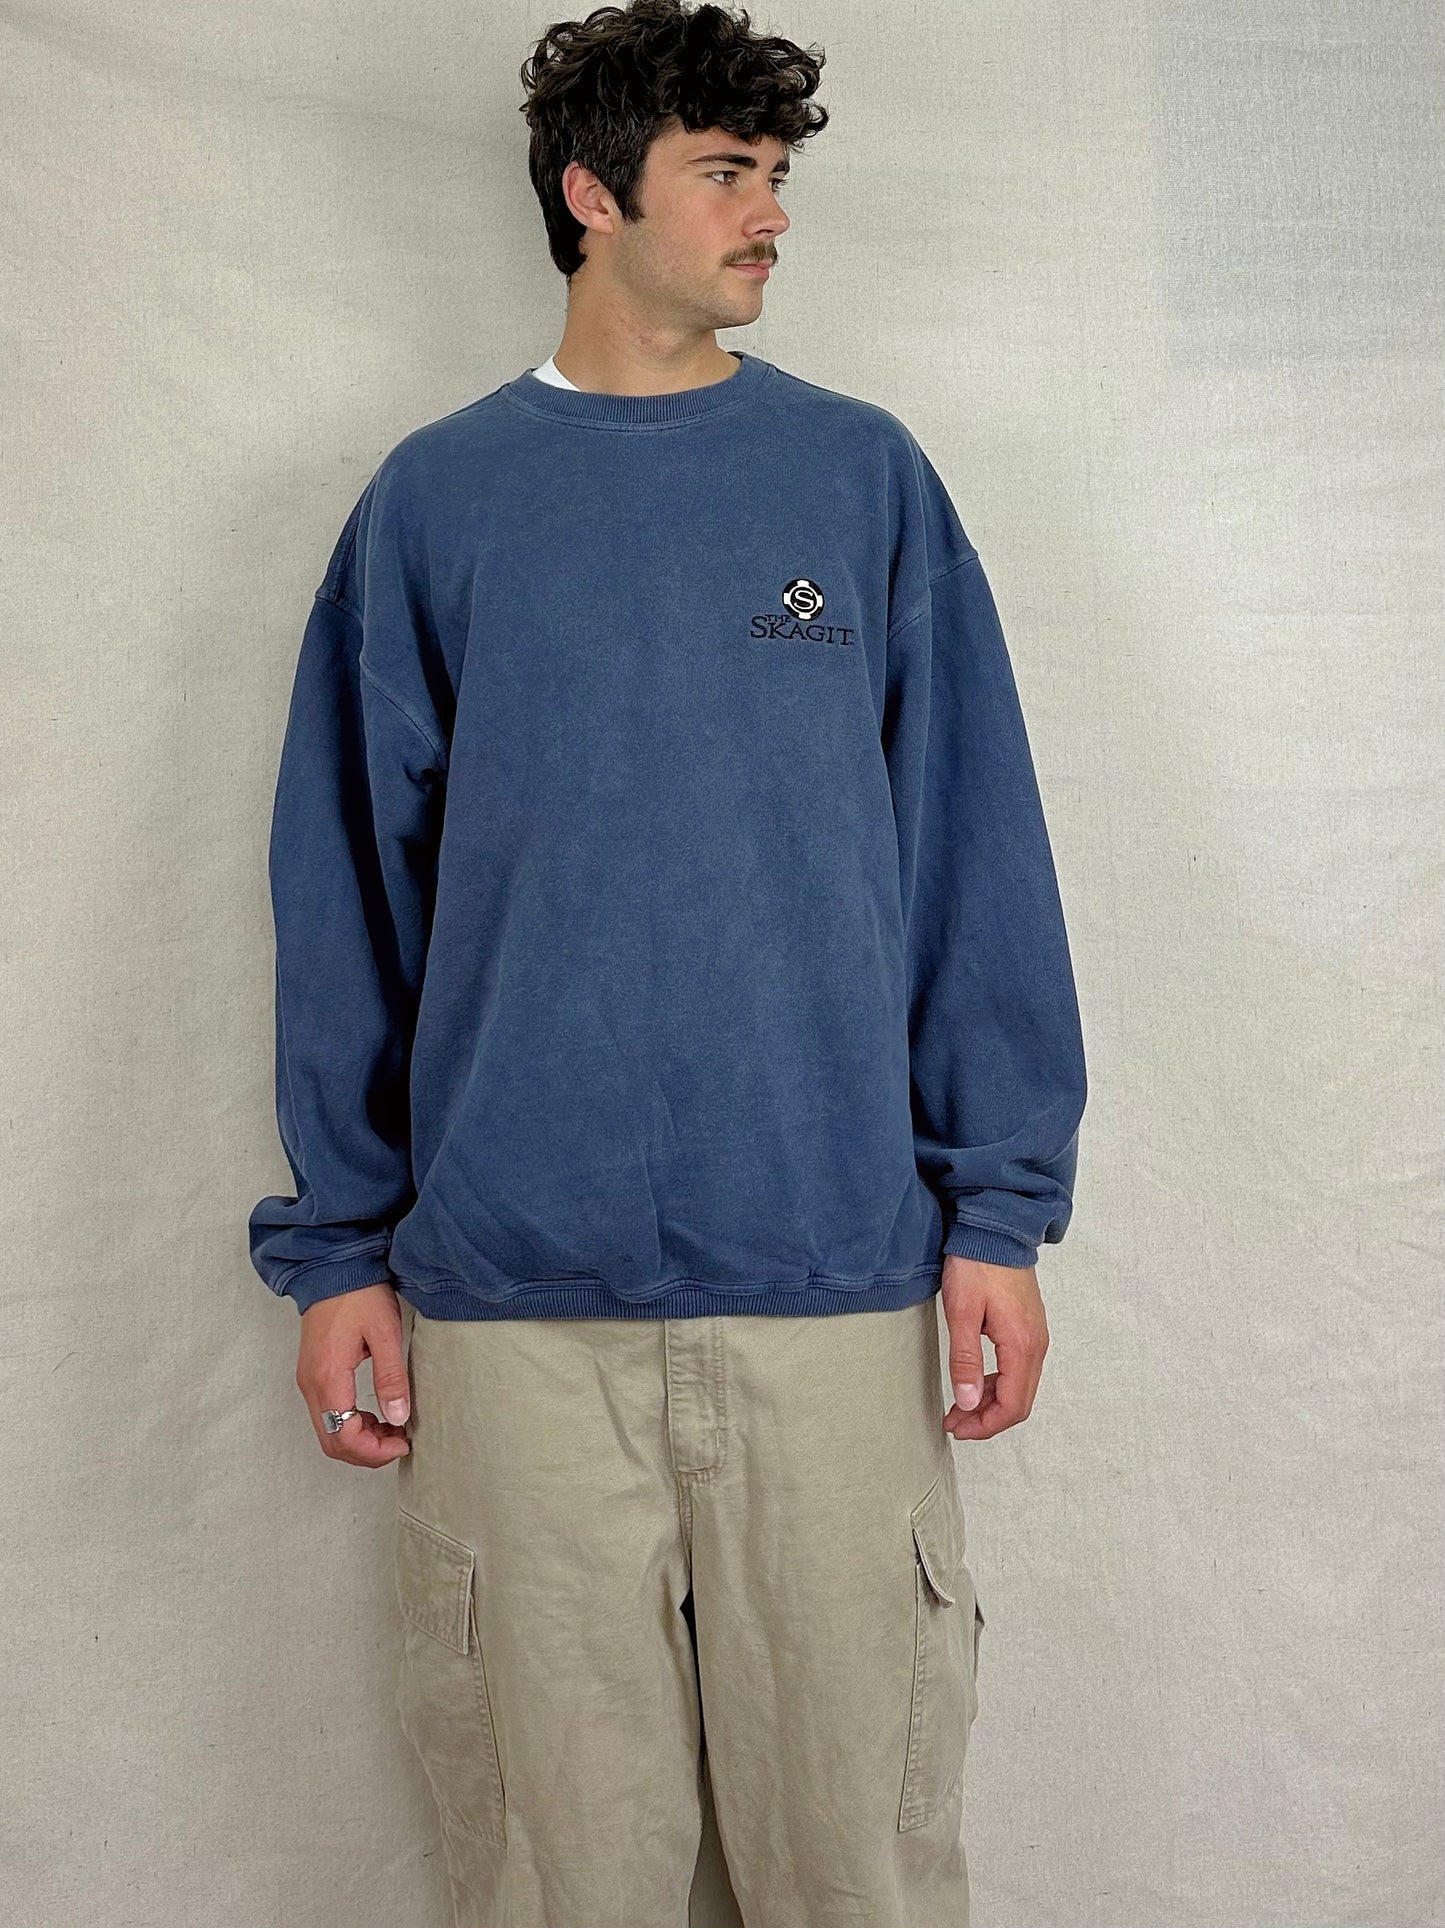 90's The Skagit Embroidered Vintage Sweatshirt Size XL-2XL